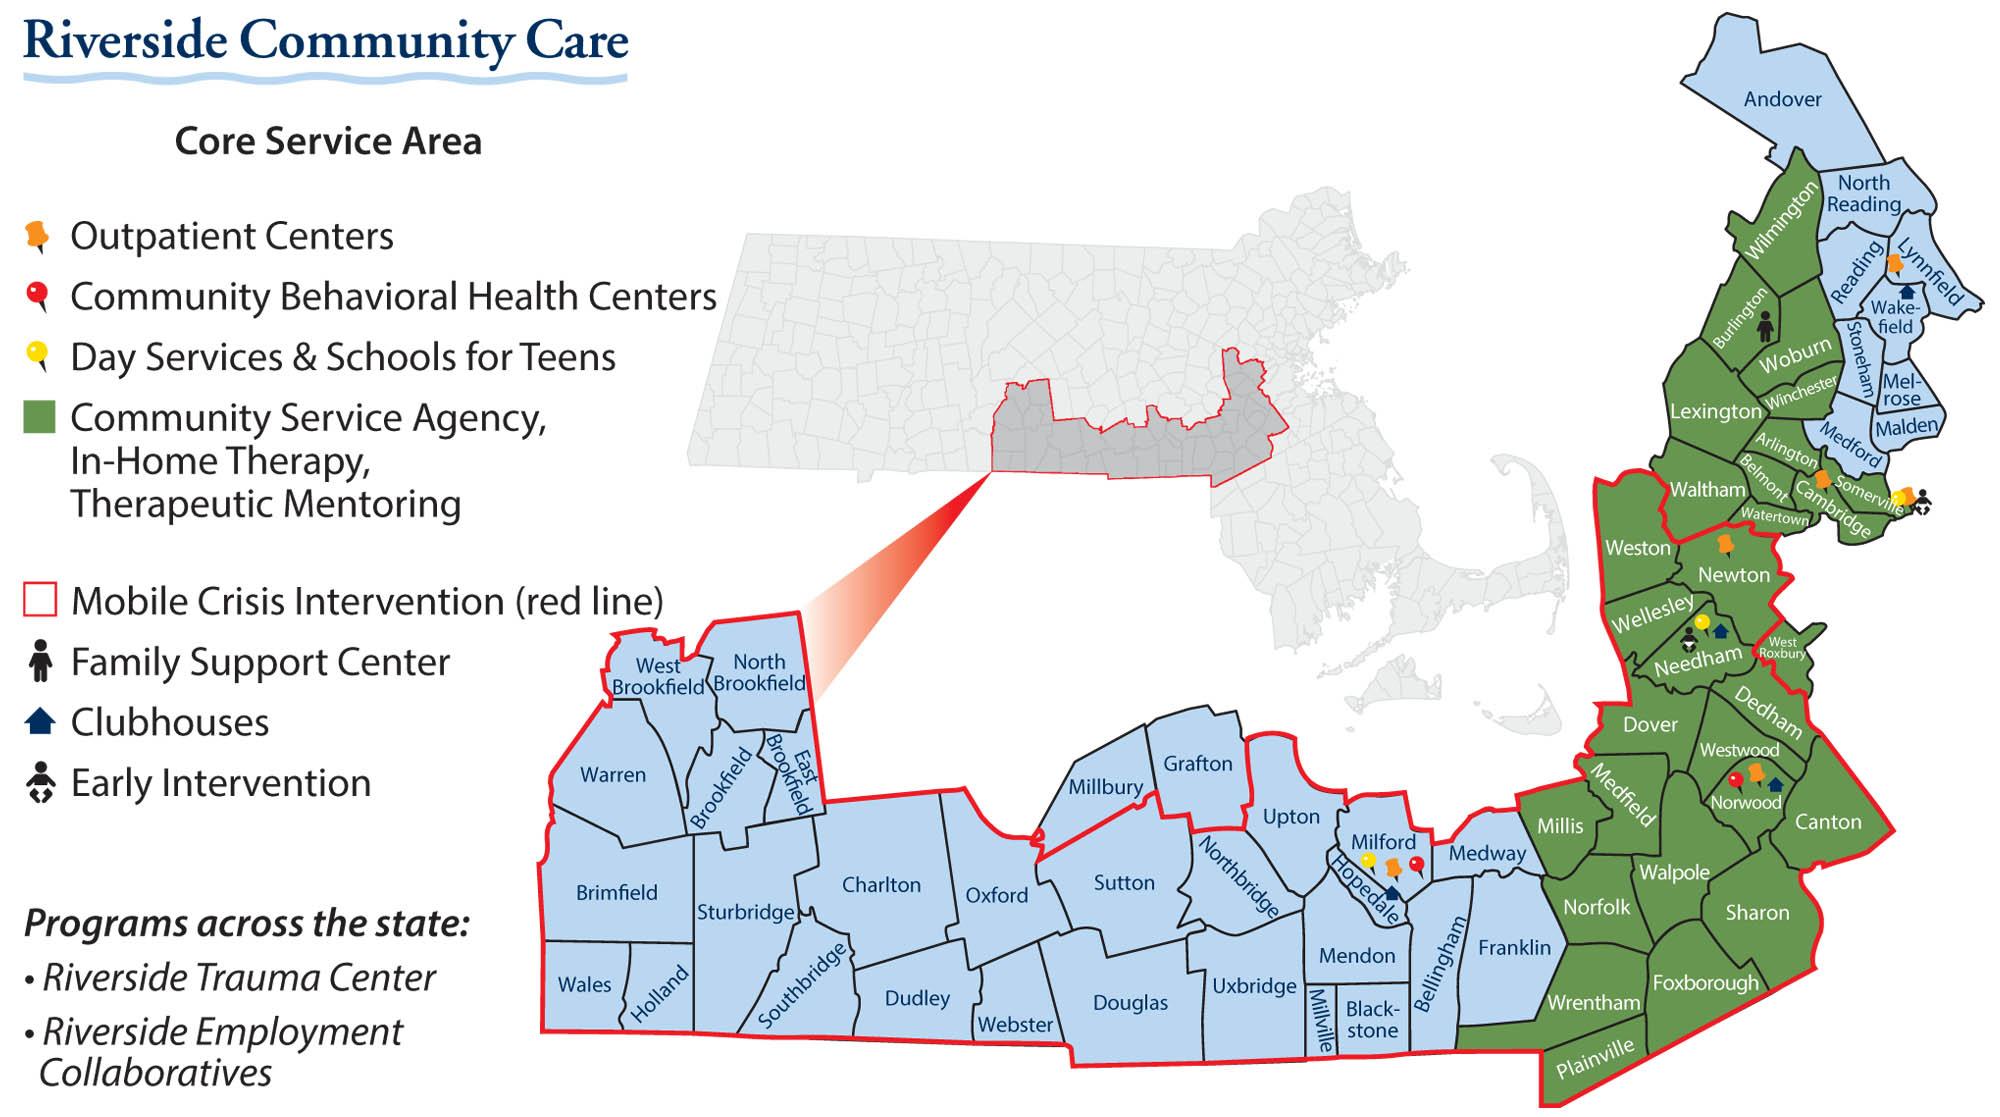 Riverside Community Care Core Service Areas